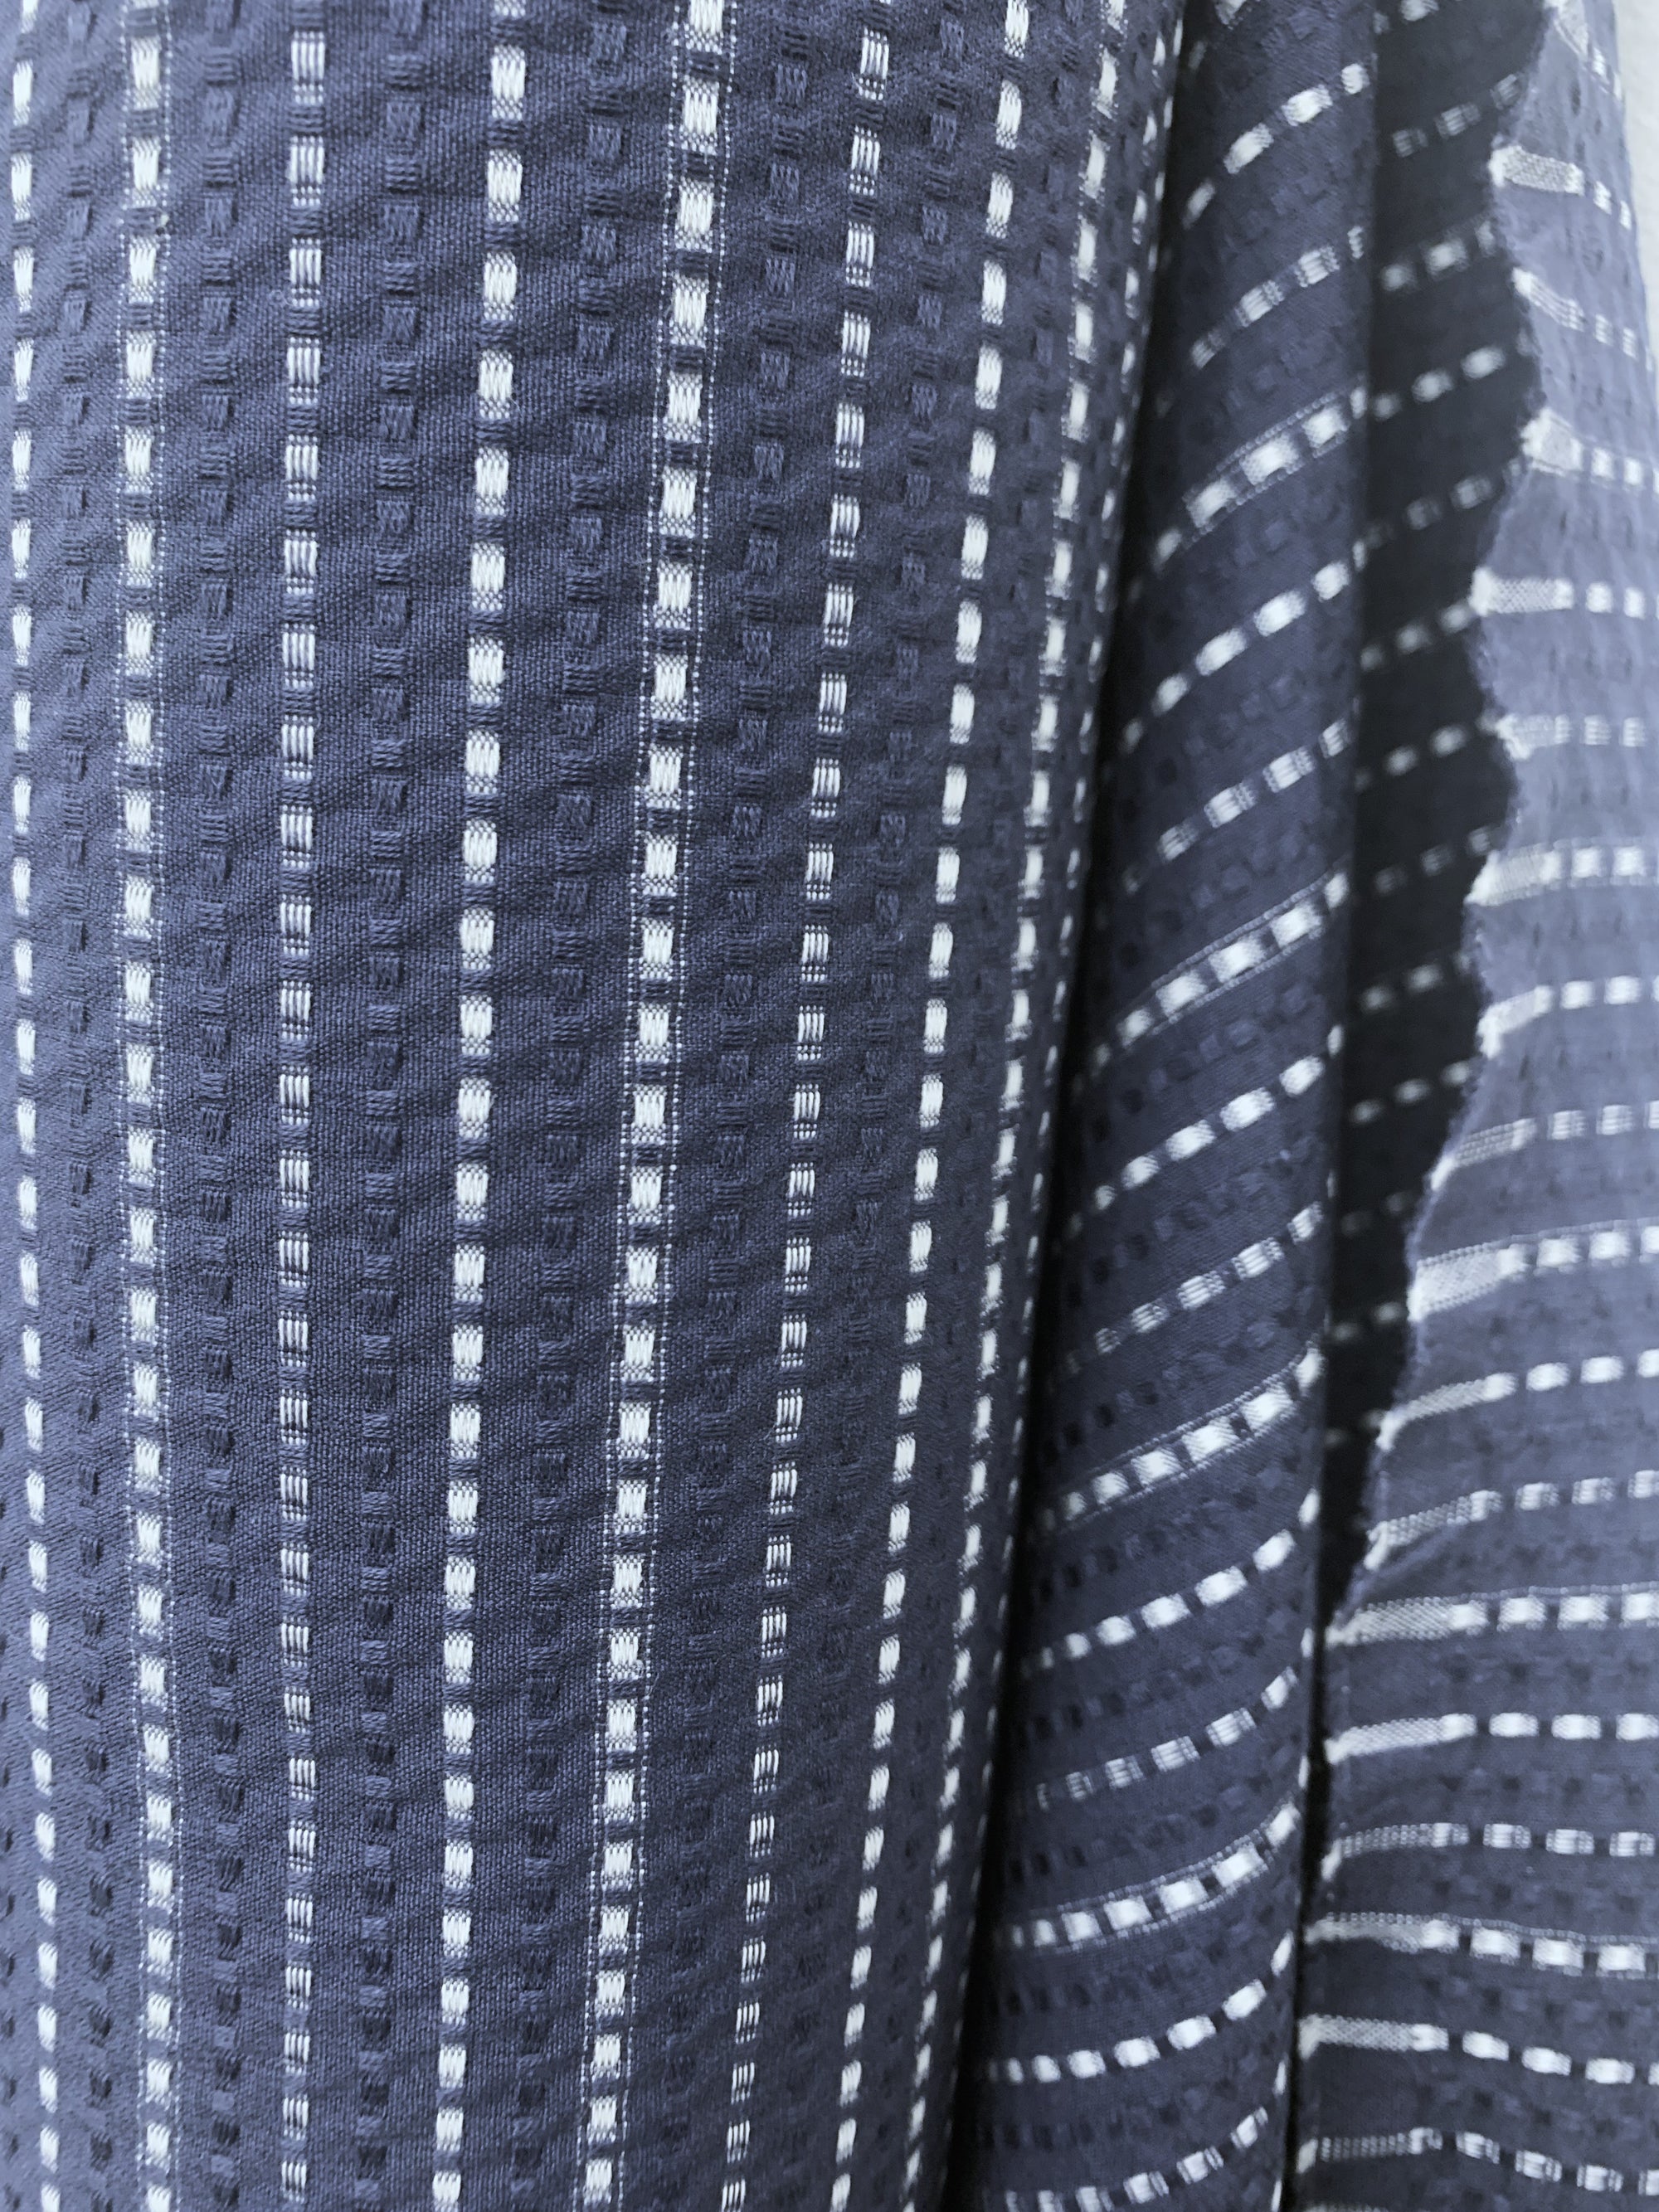 Textured Cotton - navy and white stripe